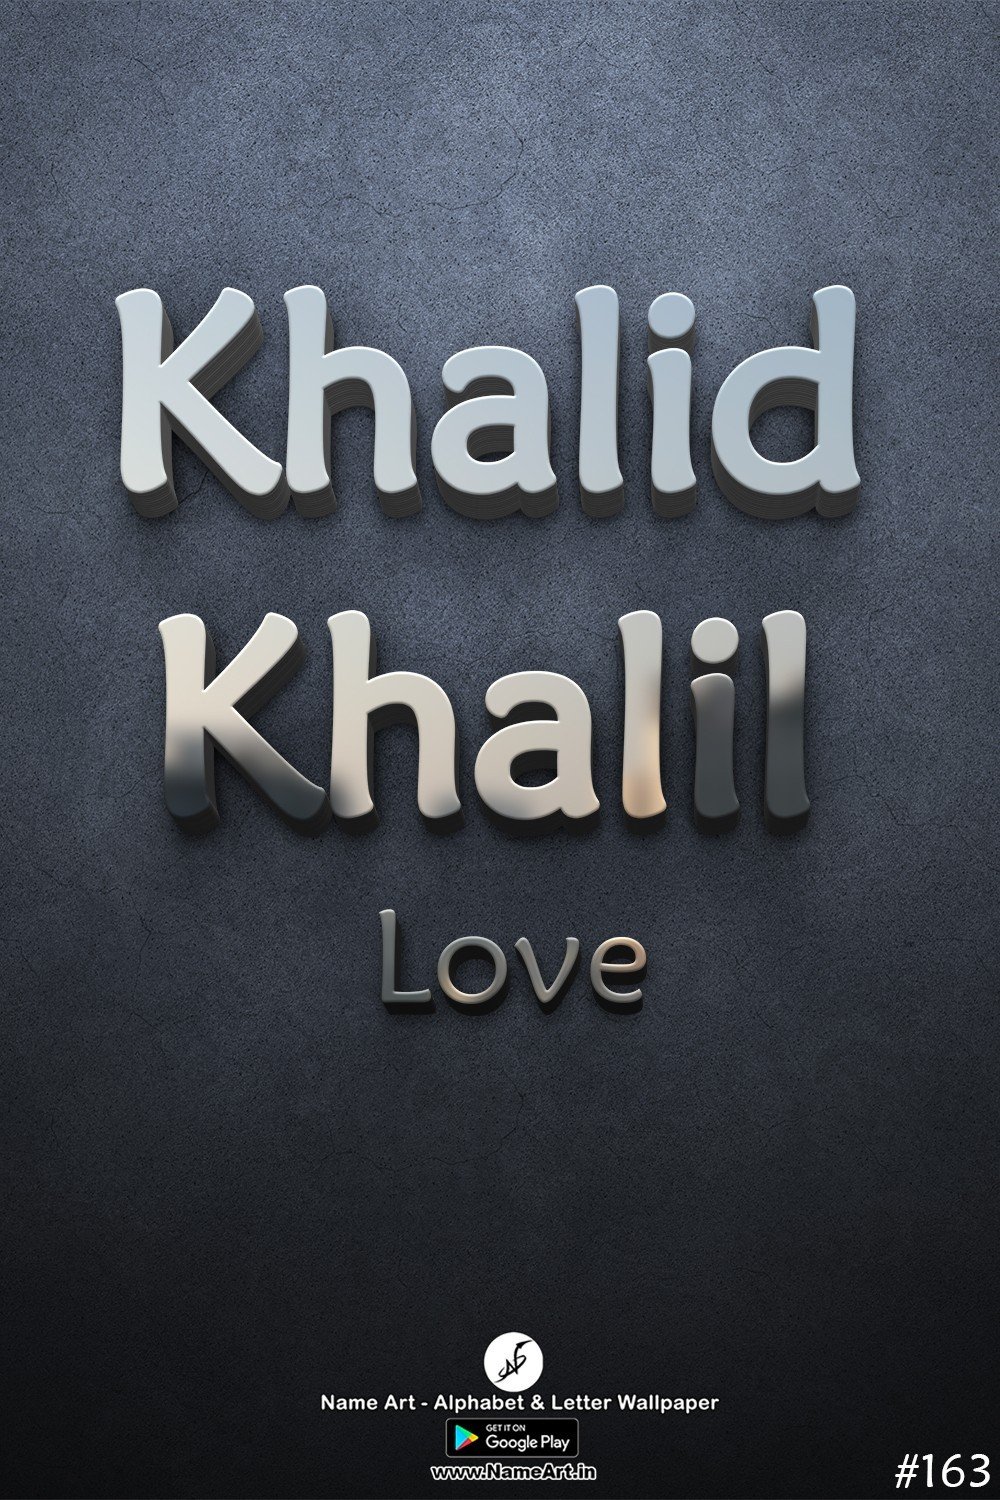 Khalid Khalil | Whatsapp Status Khalid Khalil | Happy Birthday Khalid Khalil !! | New Whatsapp Status Khalid Khalil Images |